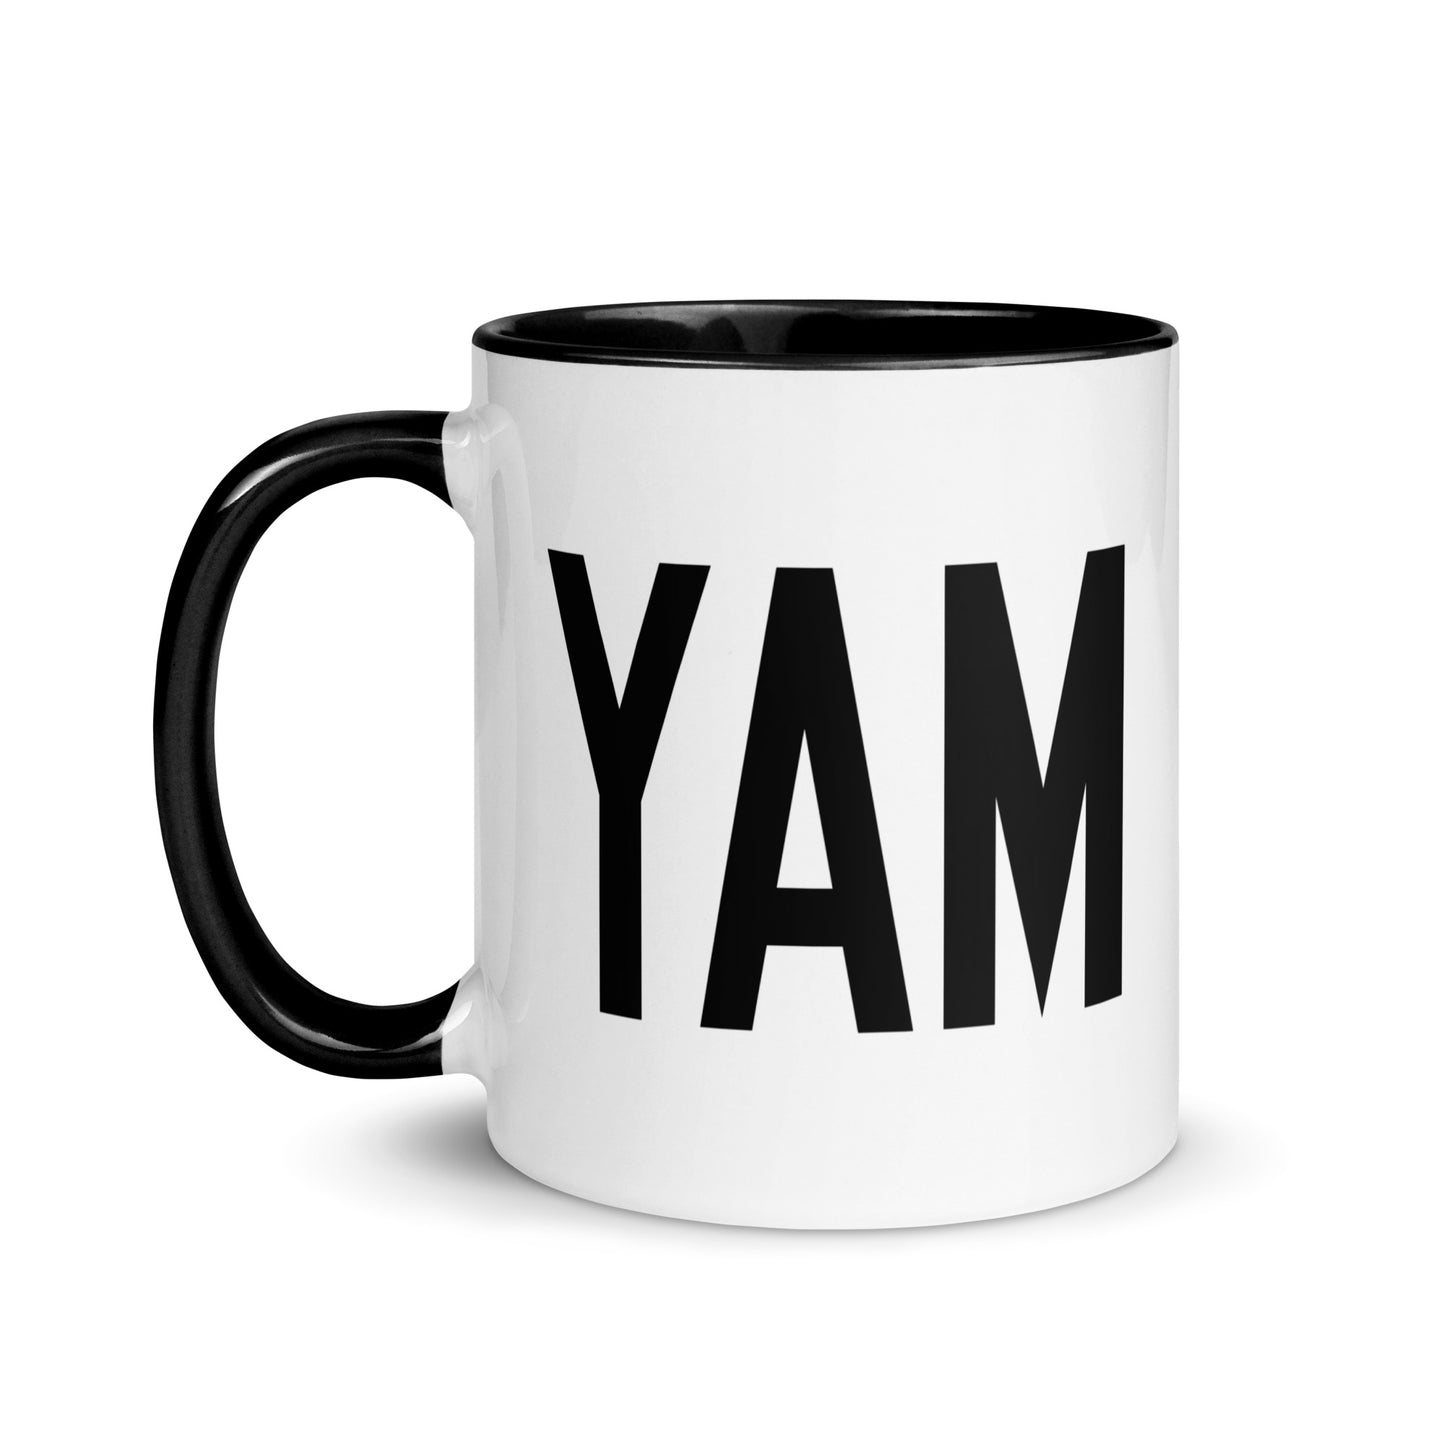 Aviation-Theme Coffee Mug - Black • YAM Sault-Ste-Marie • YHM Designs - Image 03